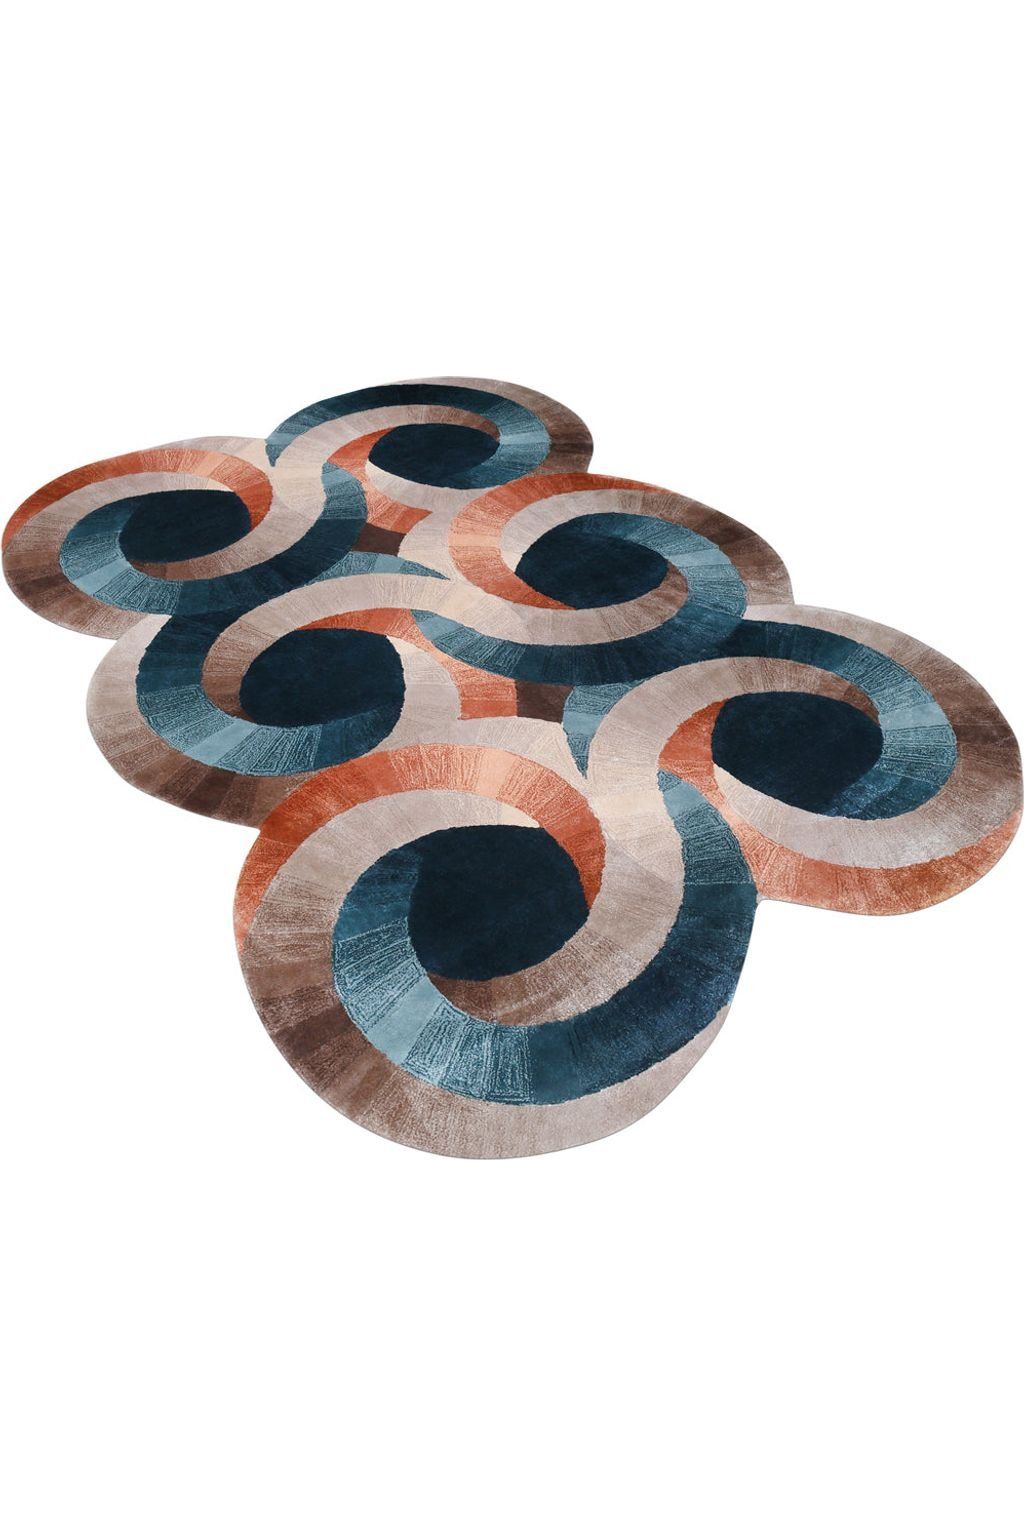 #Turkish_Carpets_Rugs# #Modern_Carpets# #Abrash_Carpets#Circle 006-N